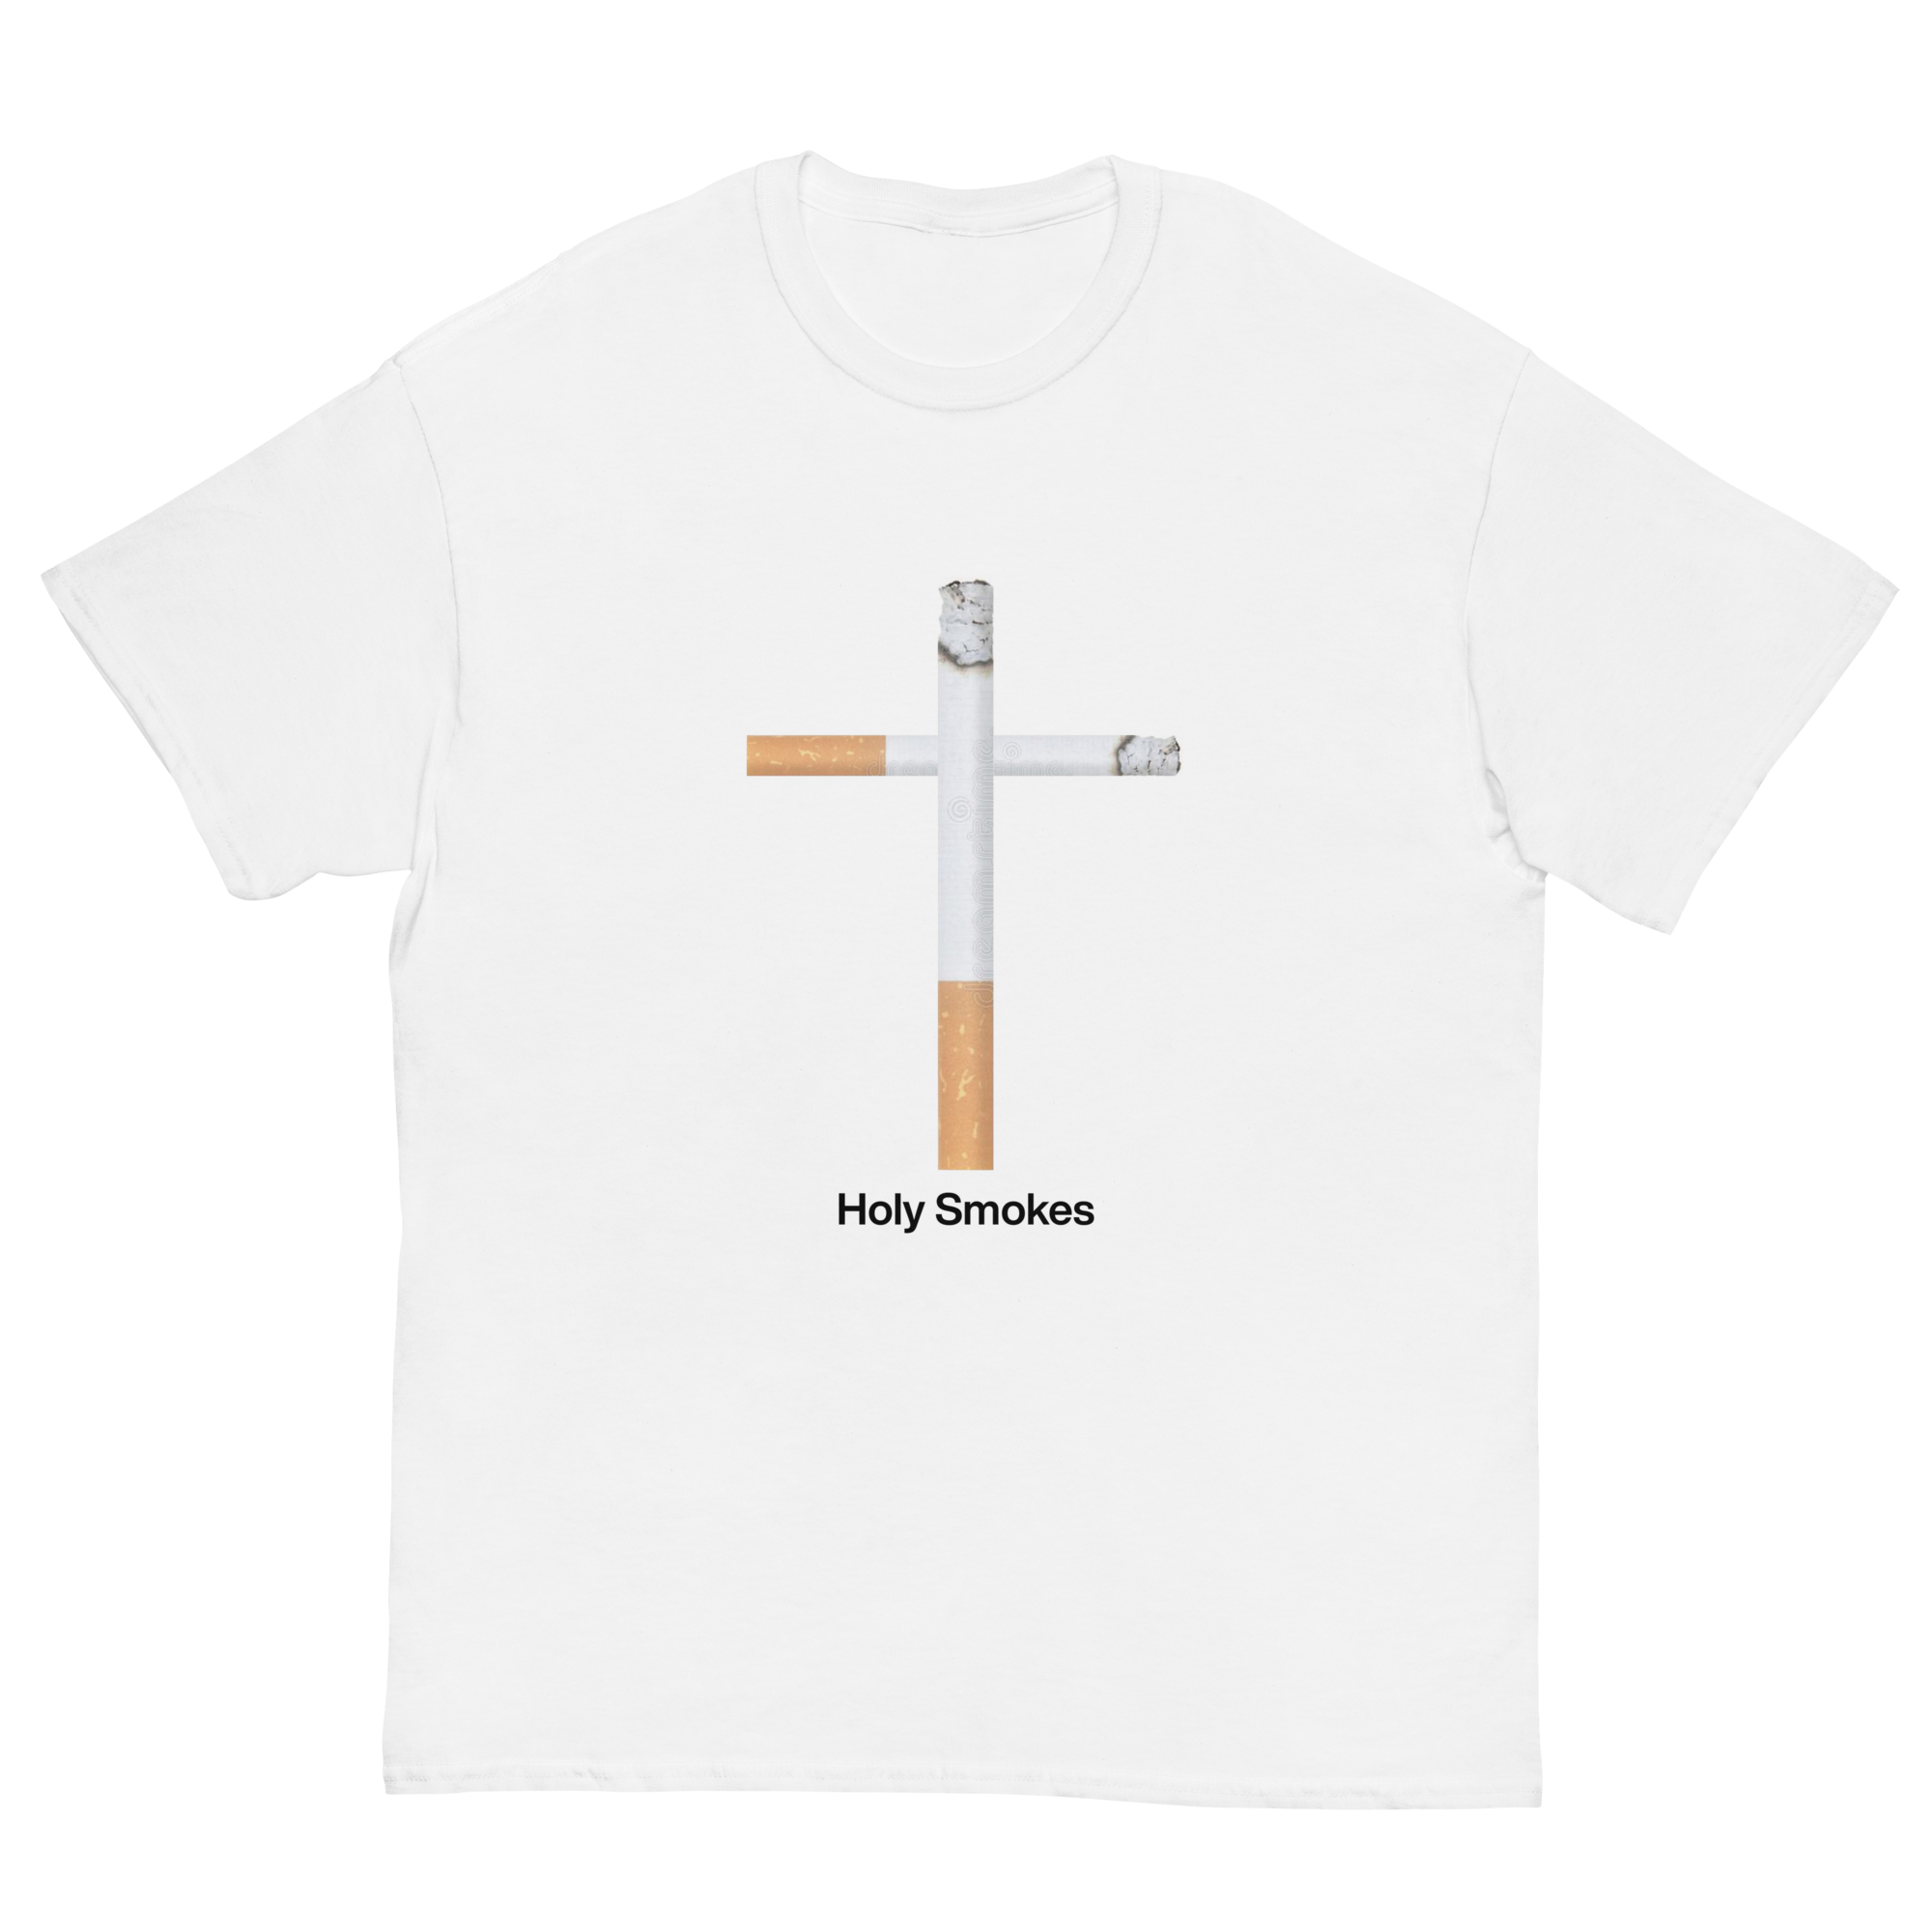 HOLY SMOKES T-SHIRT